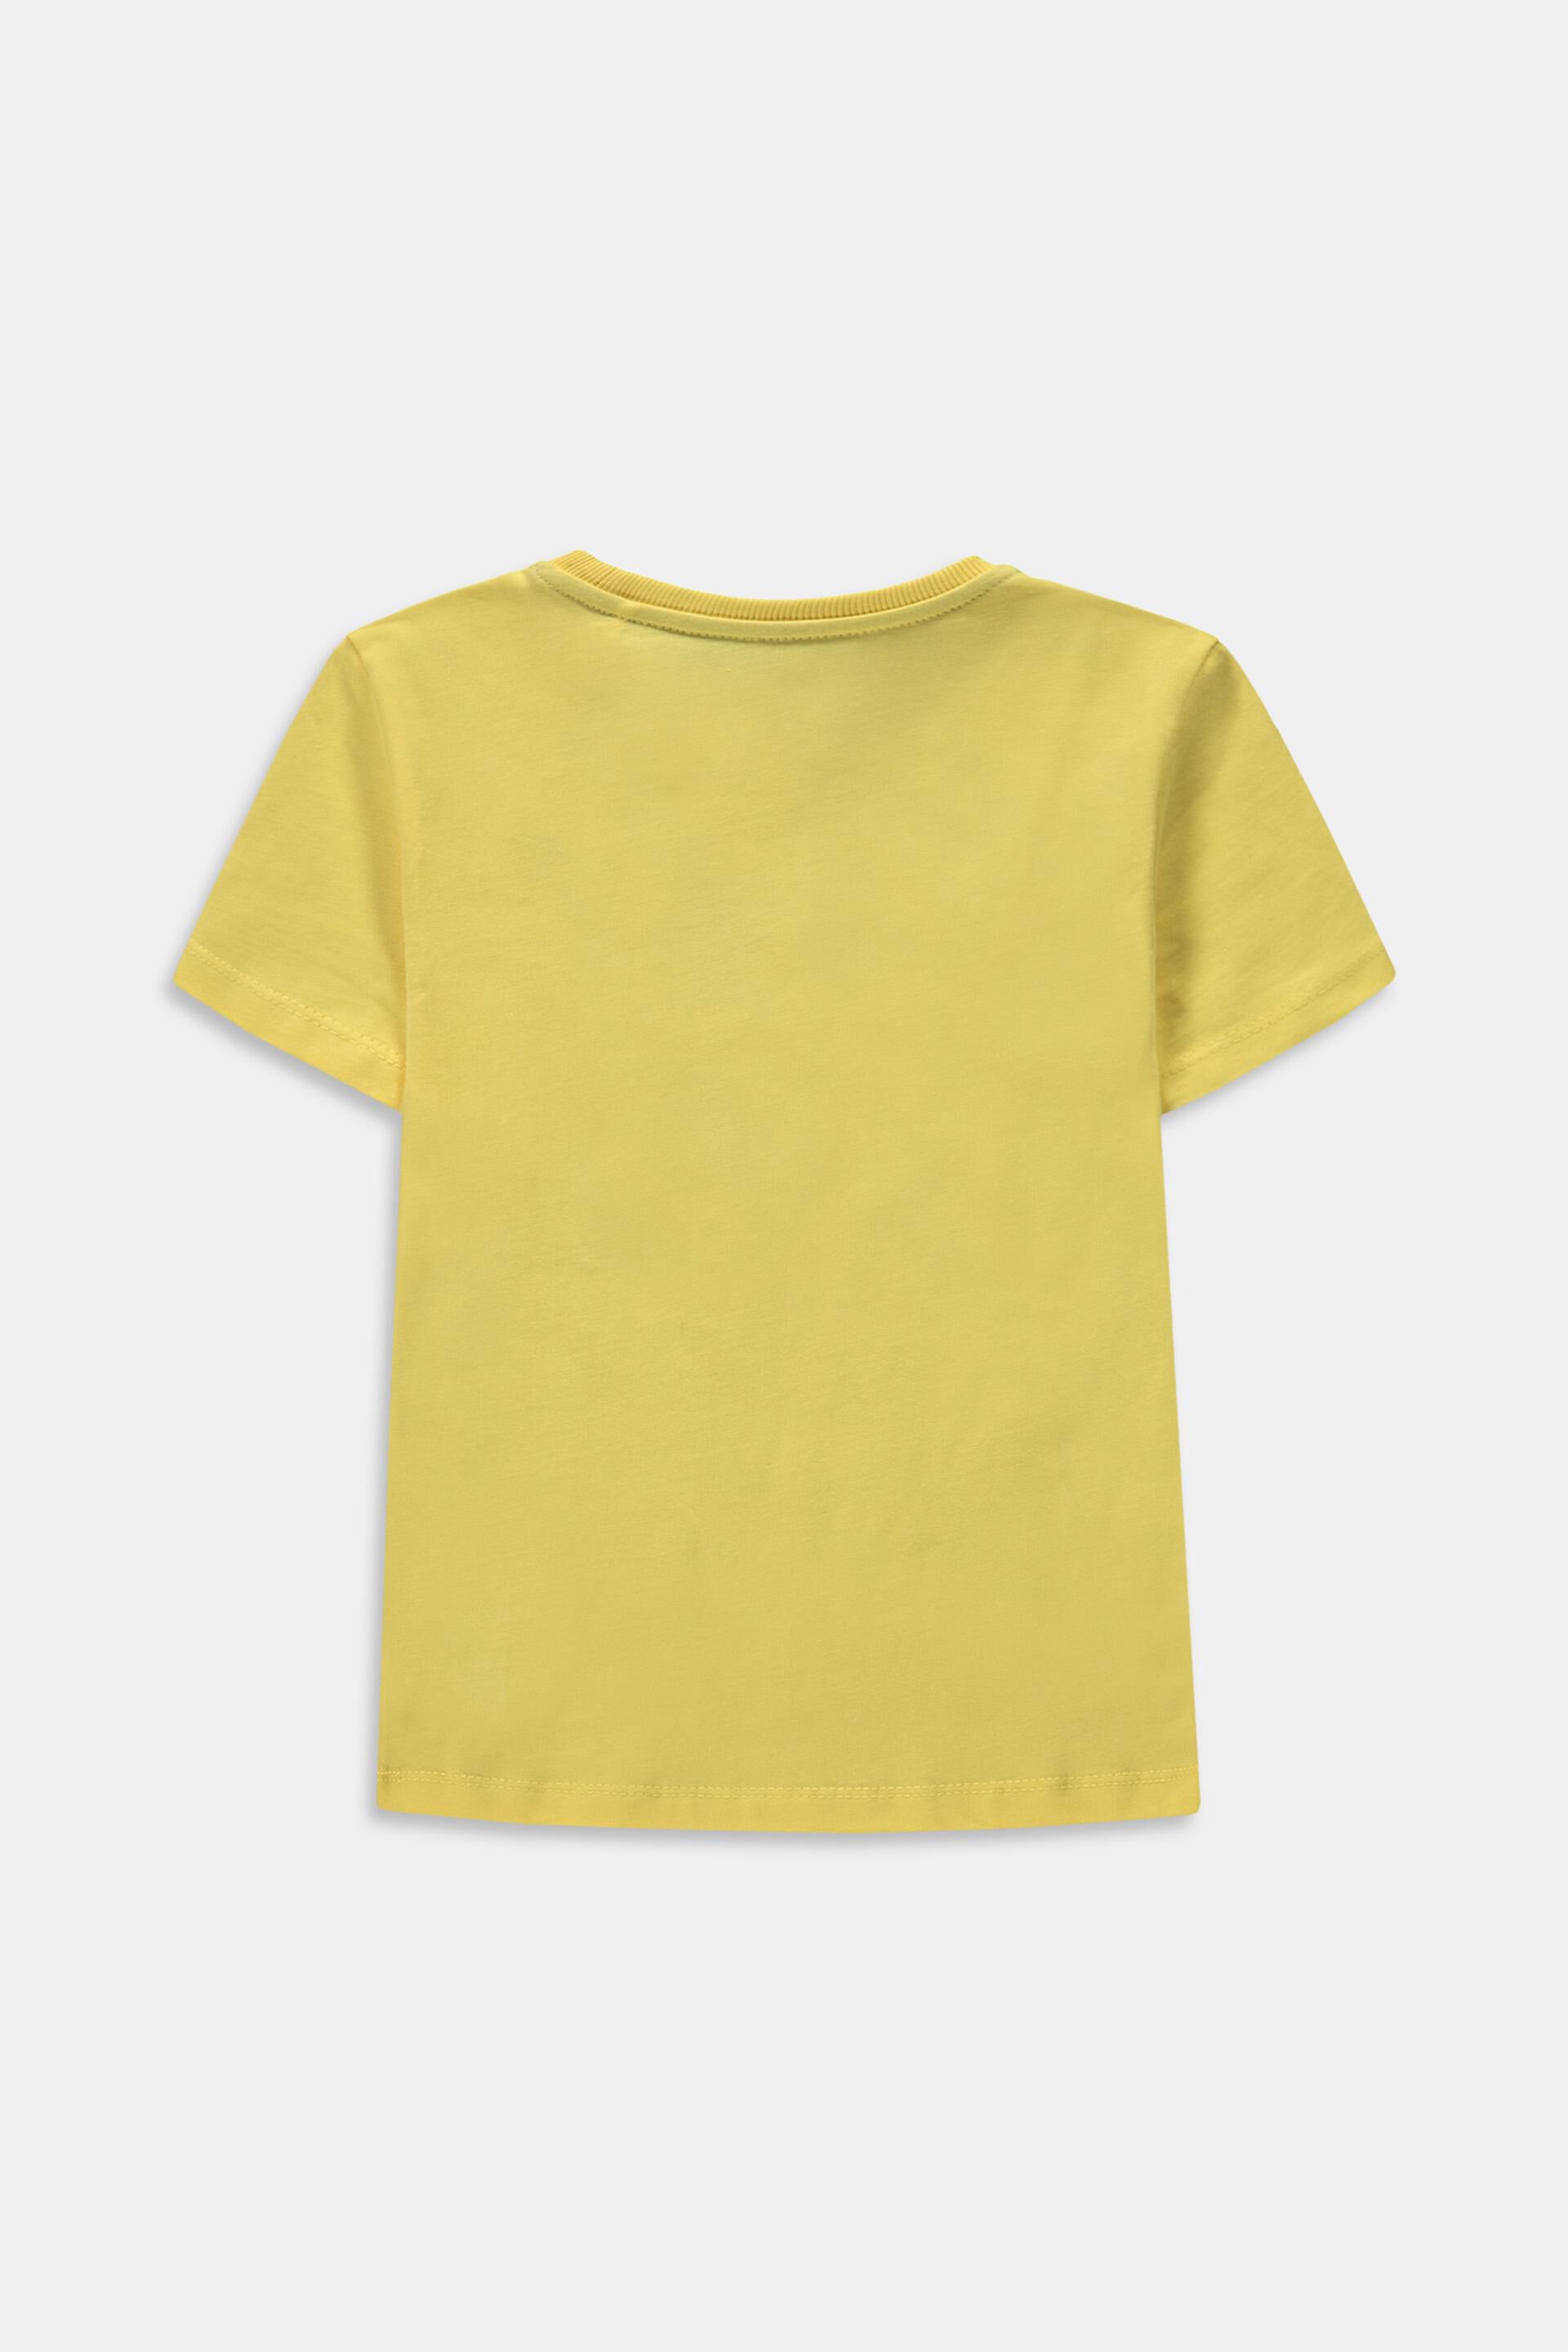 KINDER Hemden & T-Shirts Glitzer Rosa/Silber 18-24M NoName T-Shirt Rabatt 82 % 